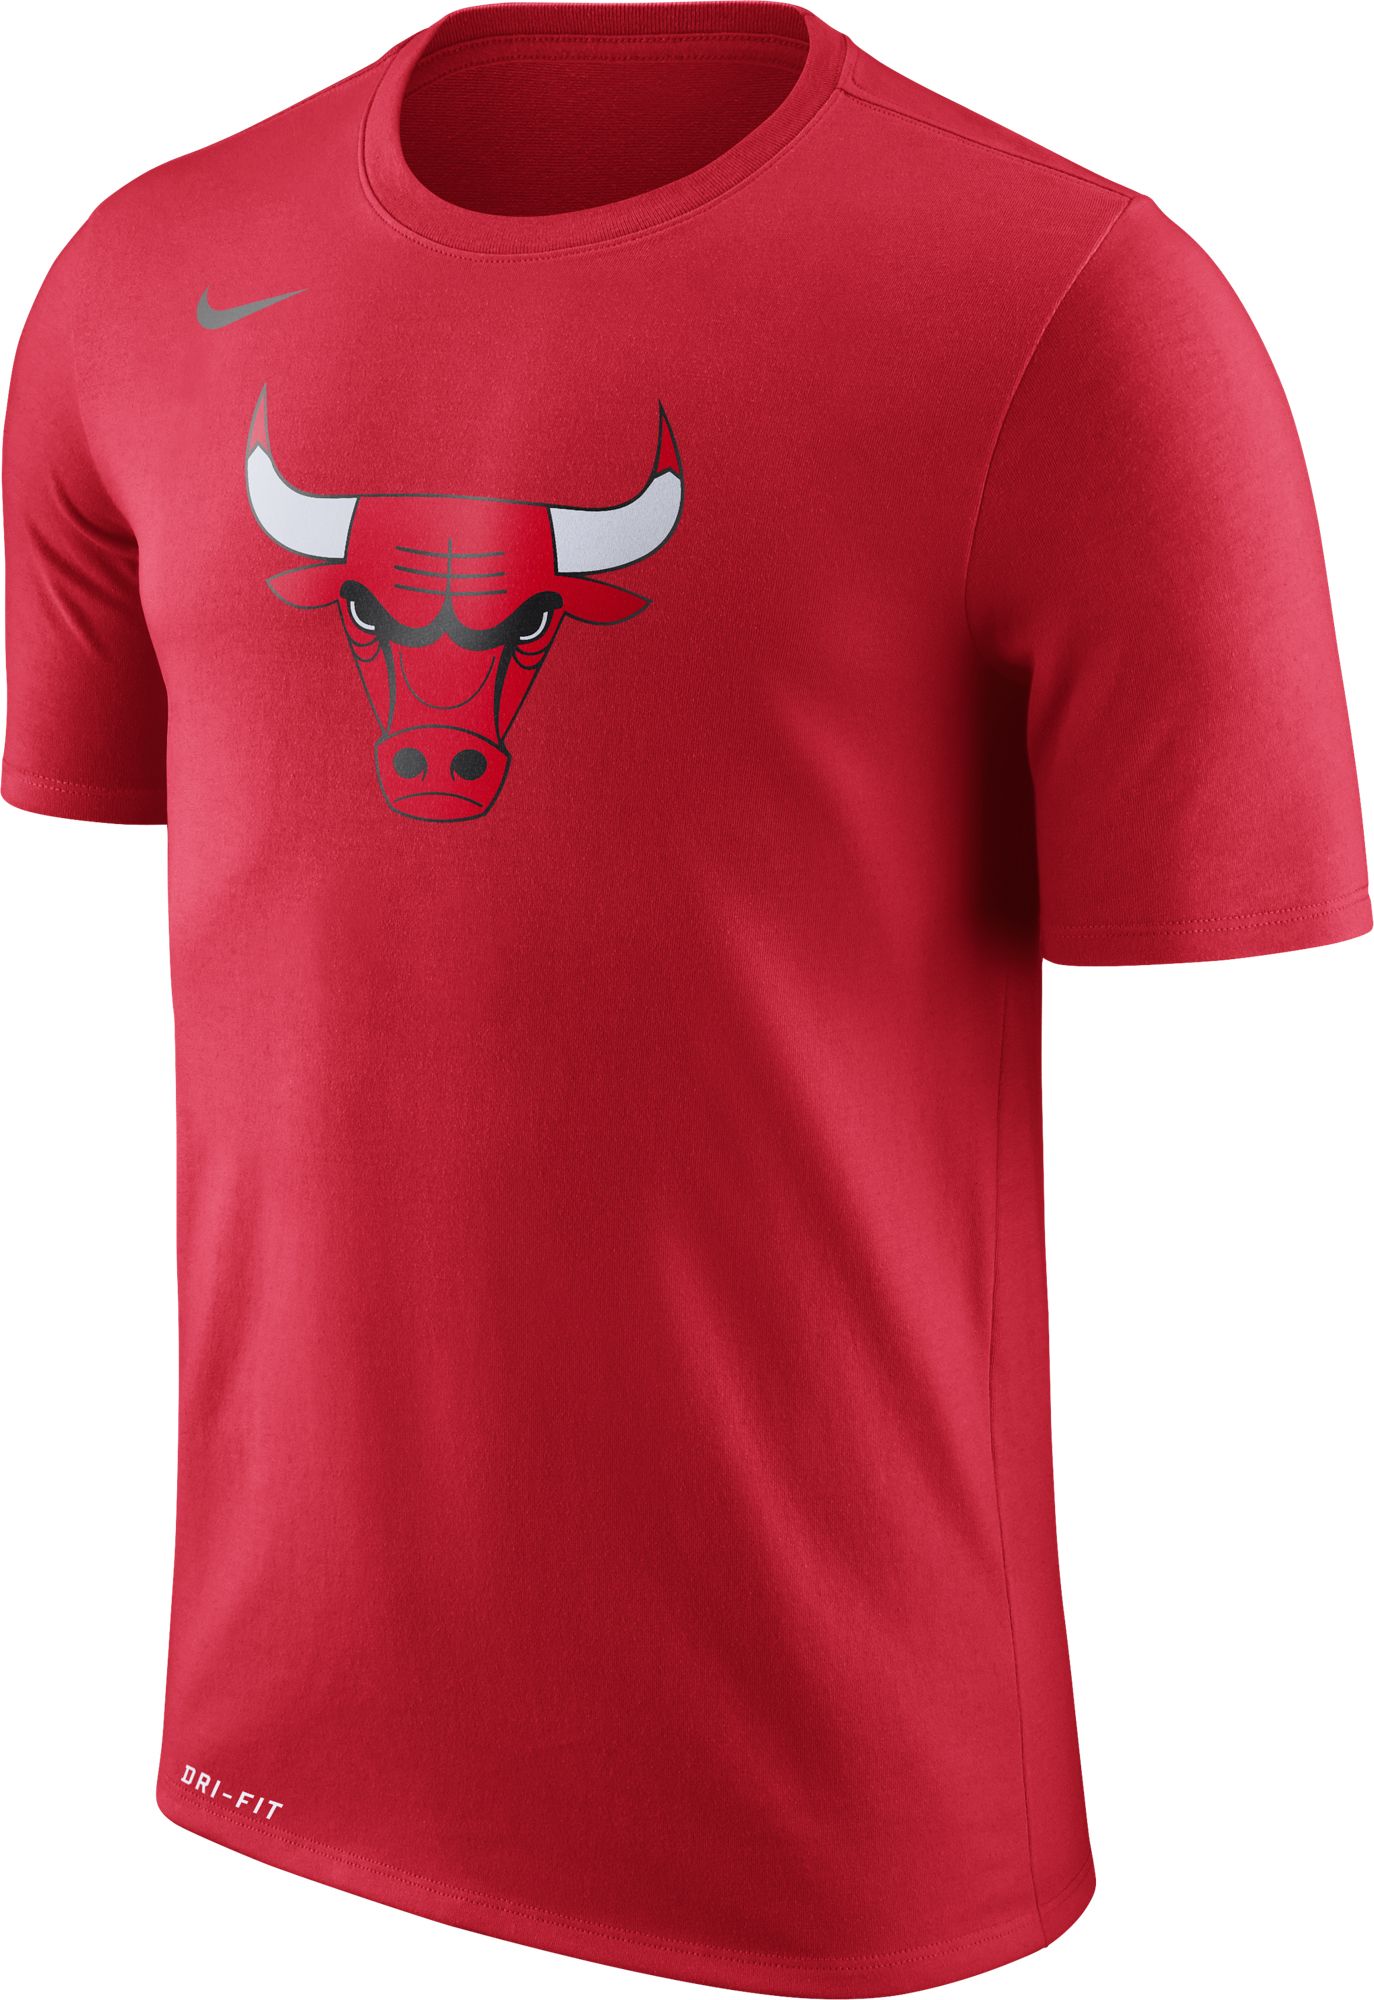 Chicago Bulls Apparel & Gear | Best Price Guarantee at DICK'S